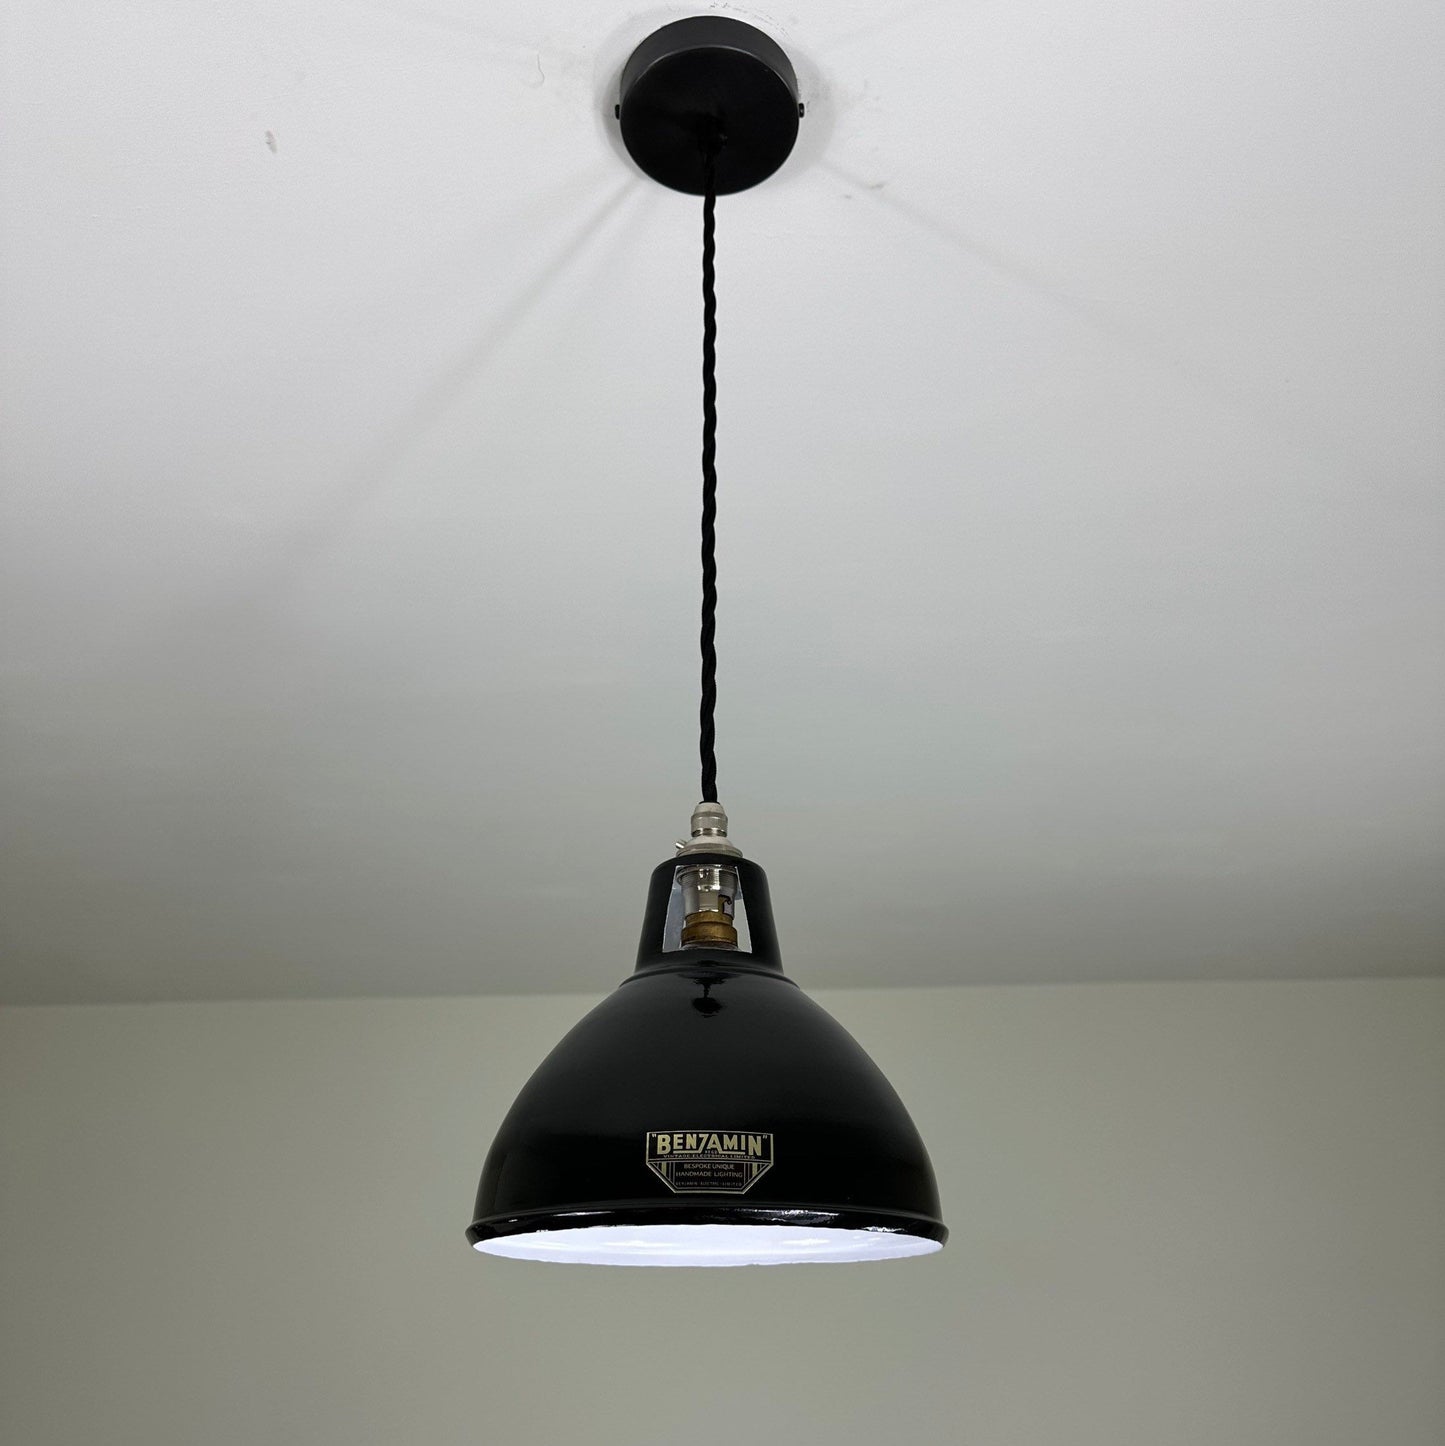 Shropham ~ Small Midnight Black Solid Shade Design Pendant Set Light | Ceiling Dining Room | Kitchen Table | Vintage Industrial | 8 Inch